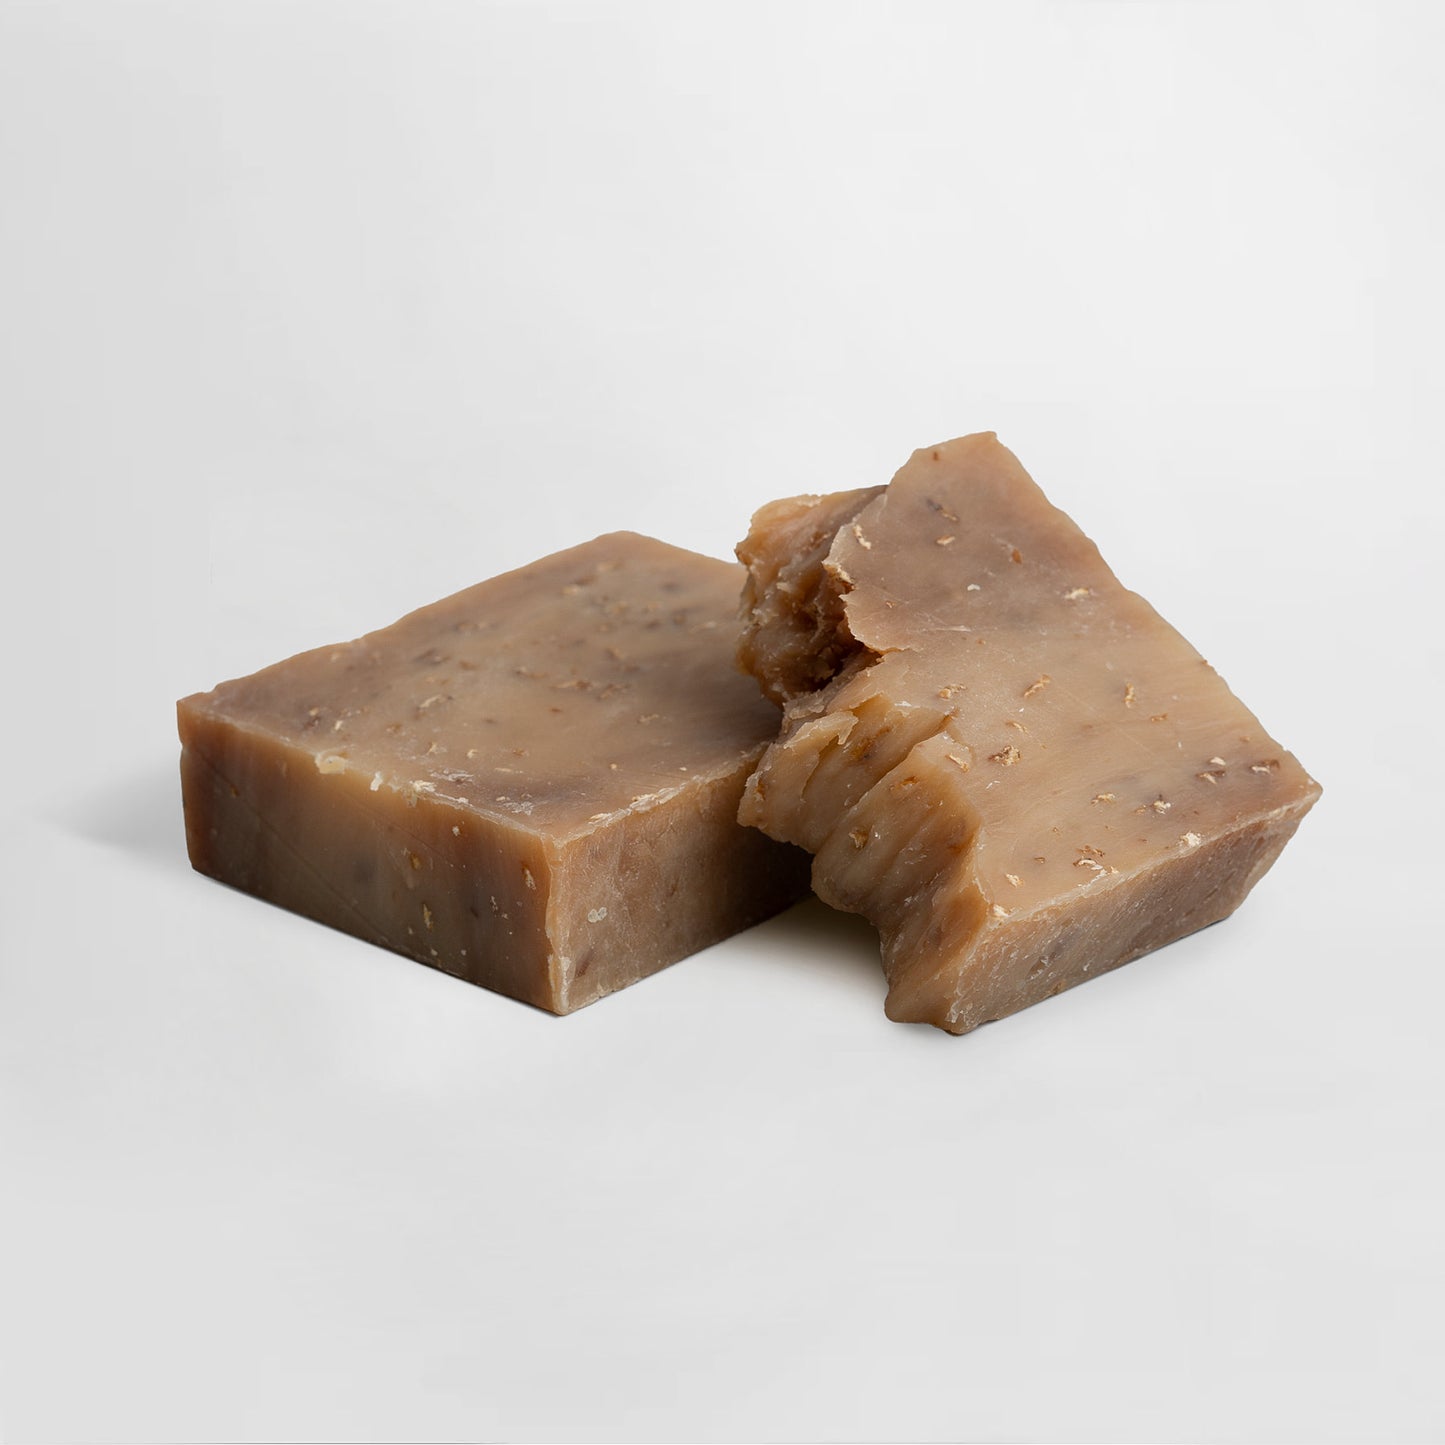 Astramor Handcrafted Oat Milk Honey Soap